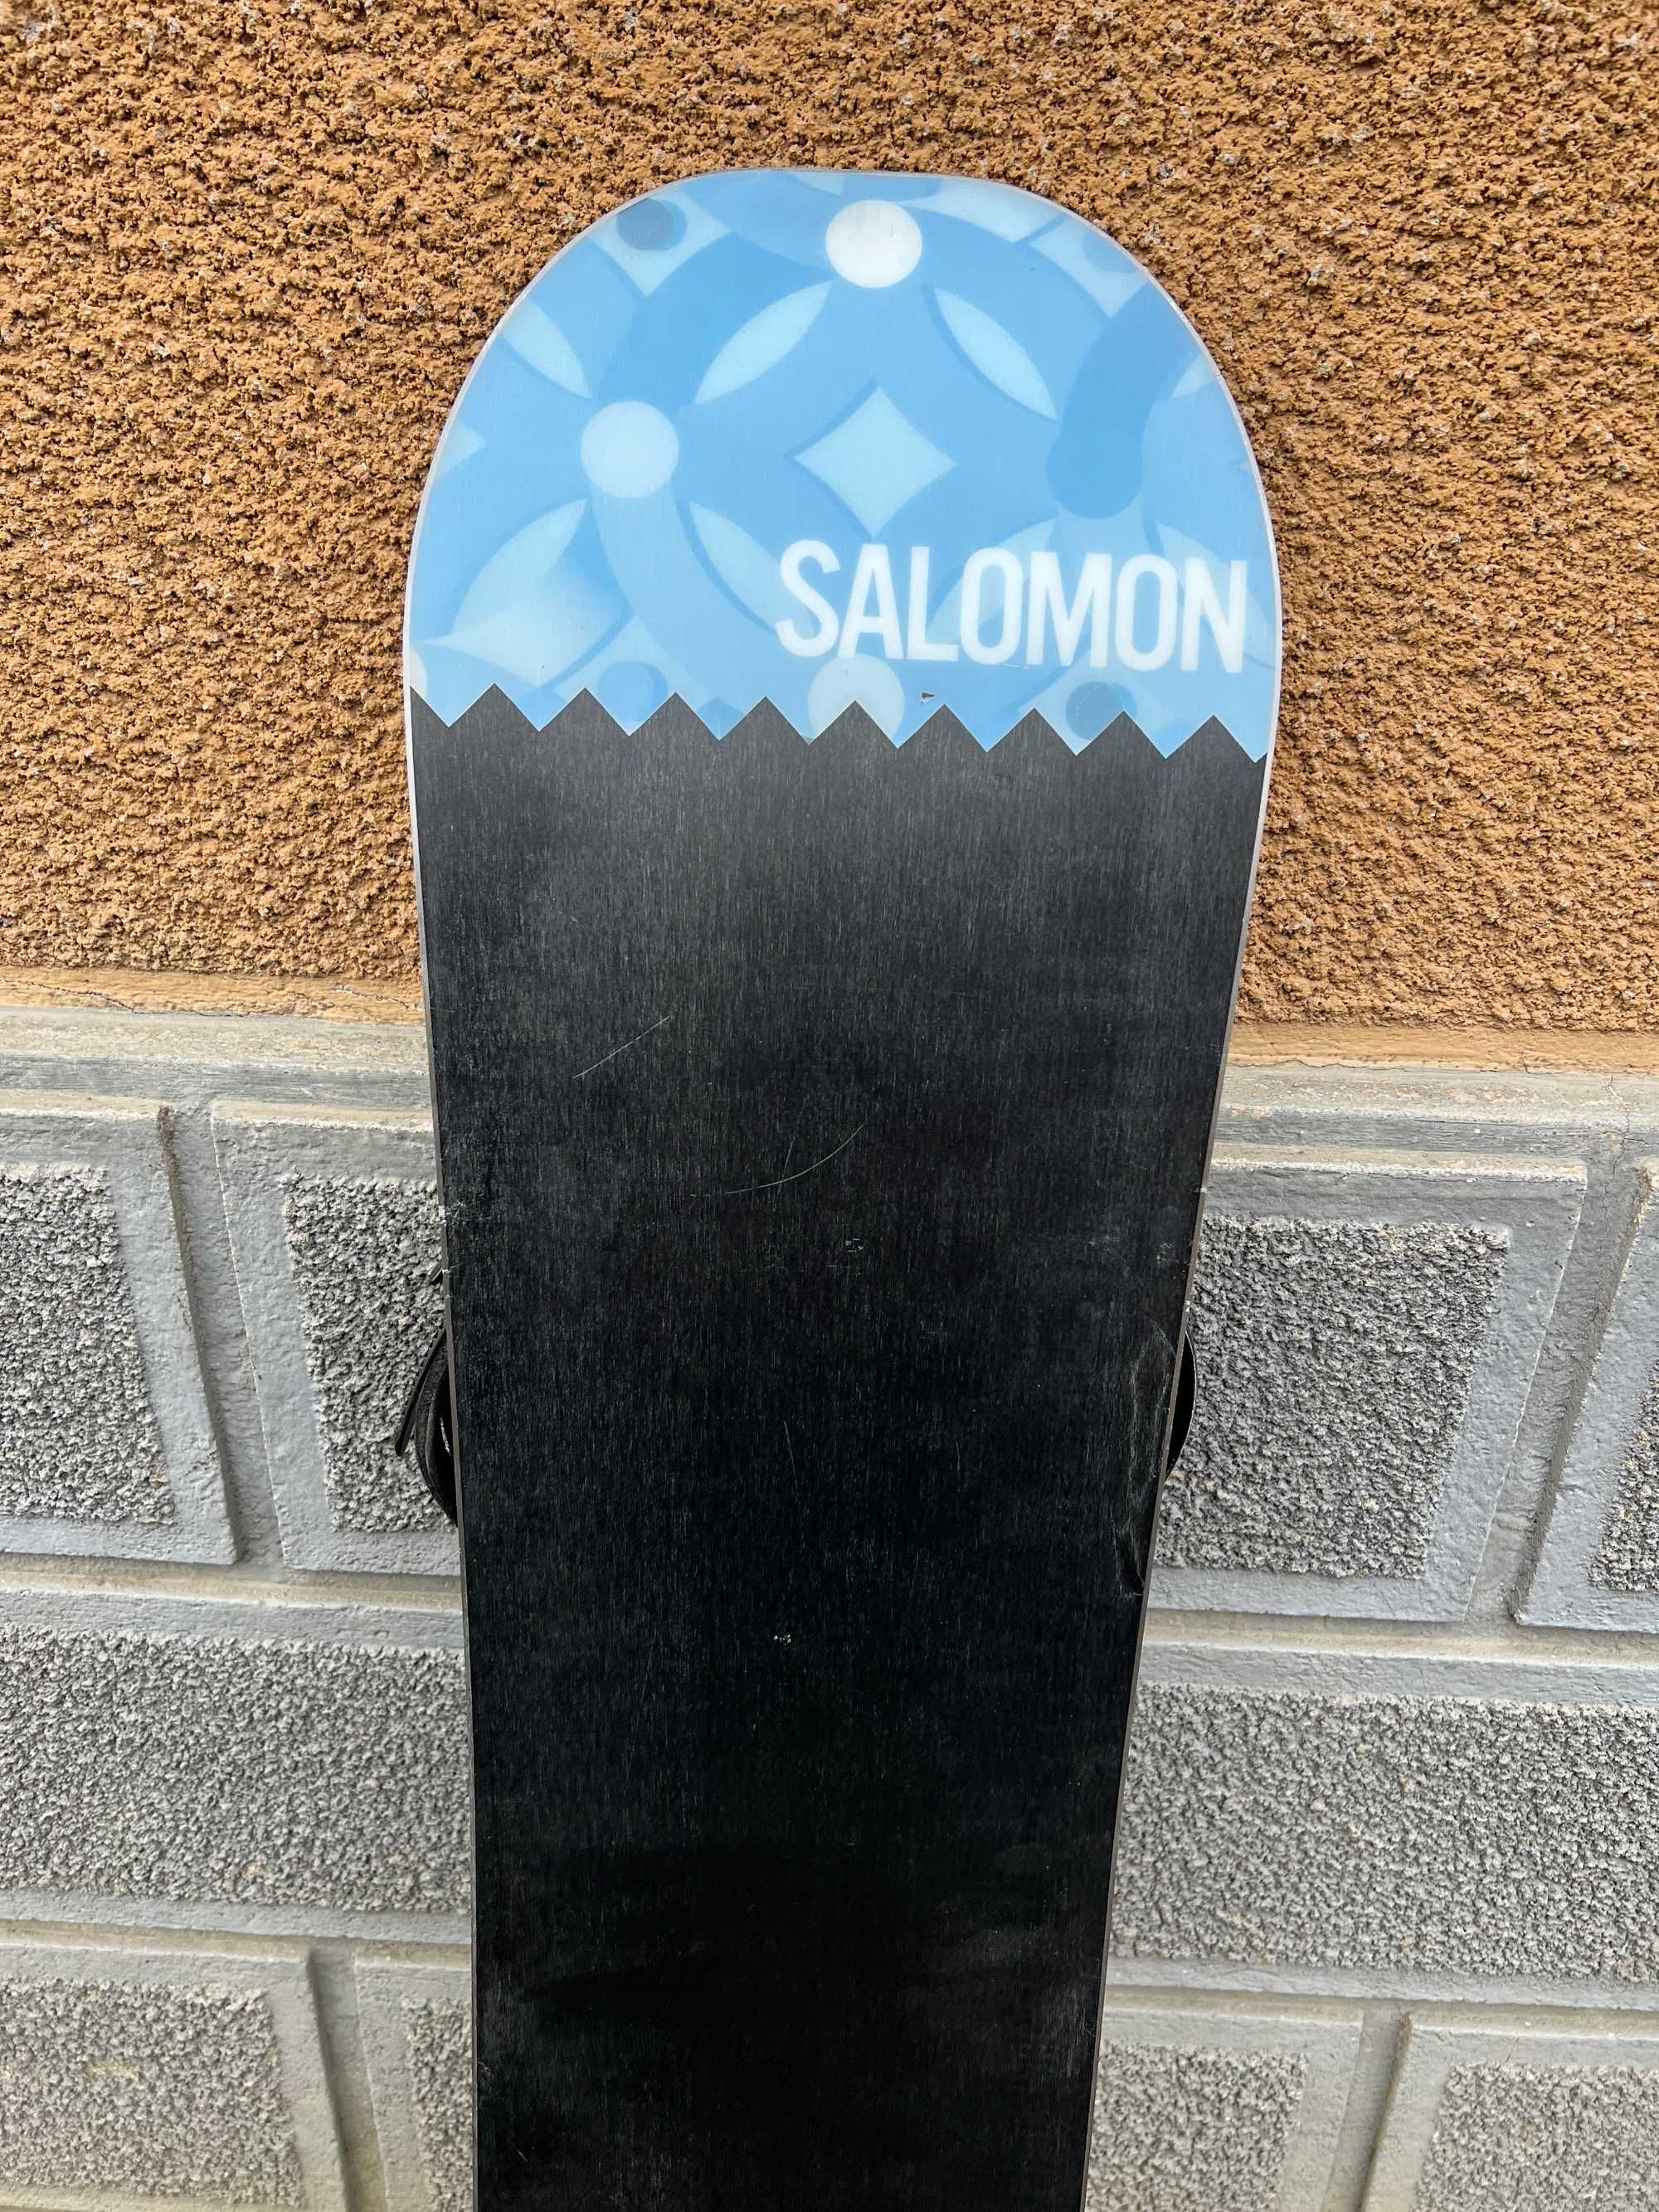 placa snowboard salomon liberty L135